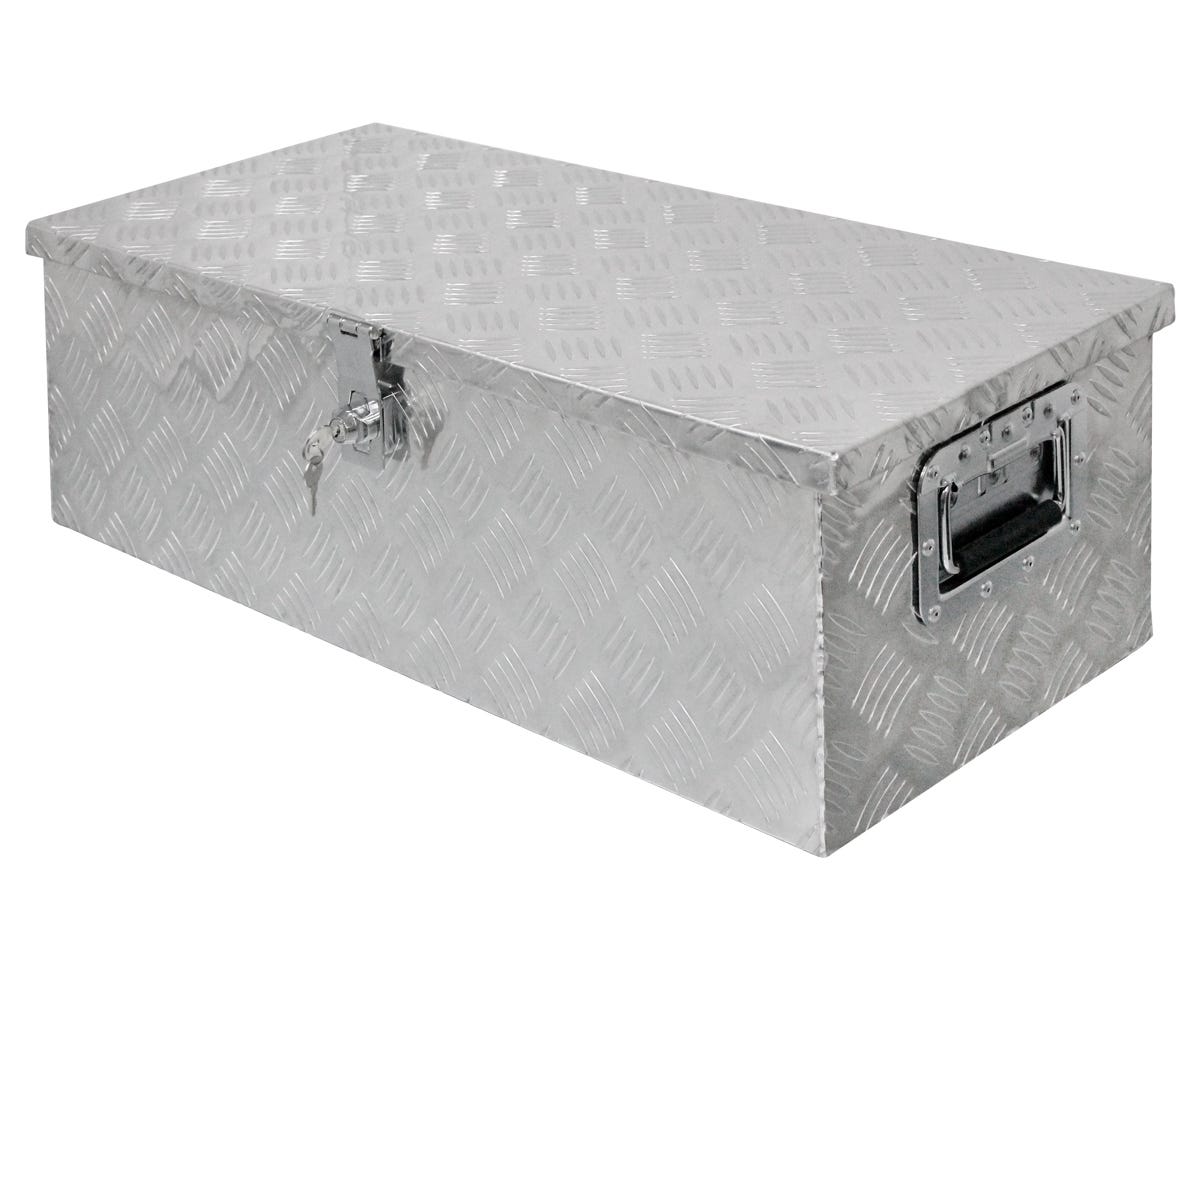  Maletín de aluminio, caja de almacenamiento de